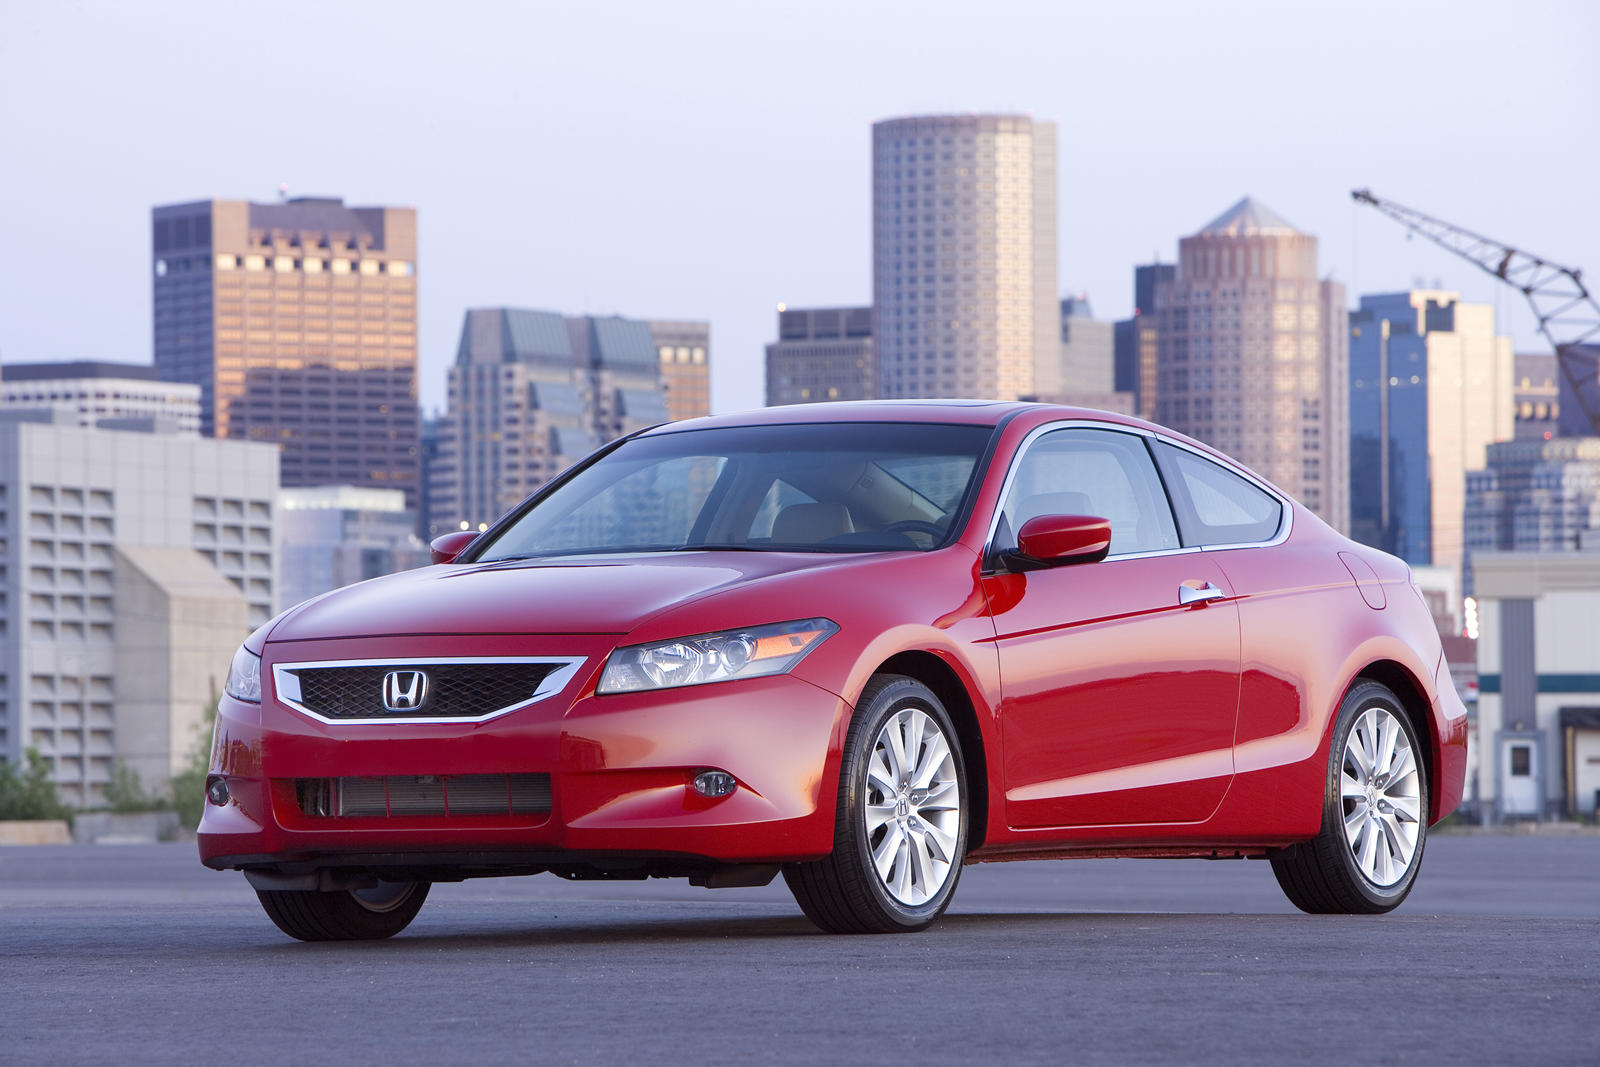 2010 Honda Accord Coupe: Review, Trims, Specs, Price, New Interior ...